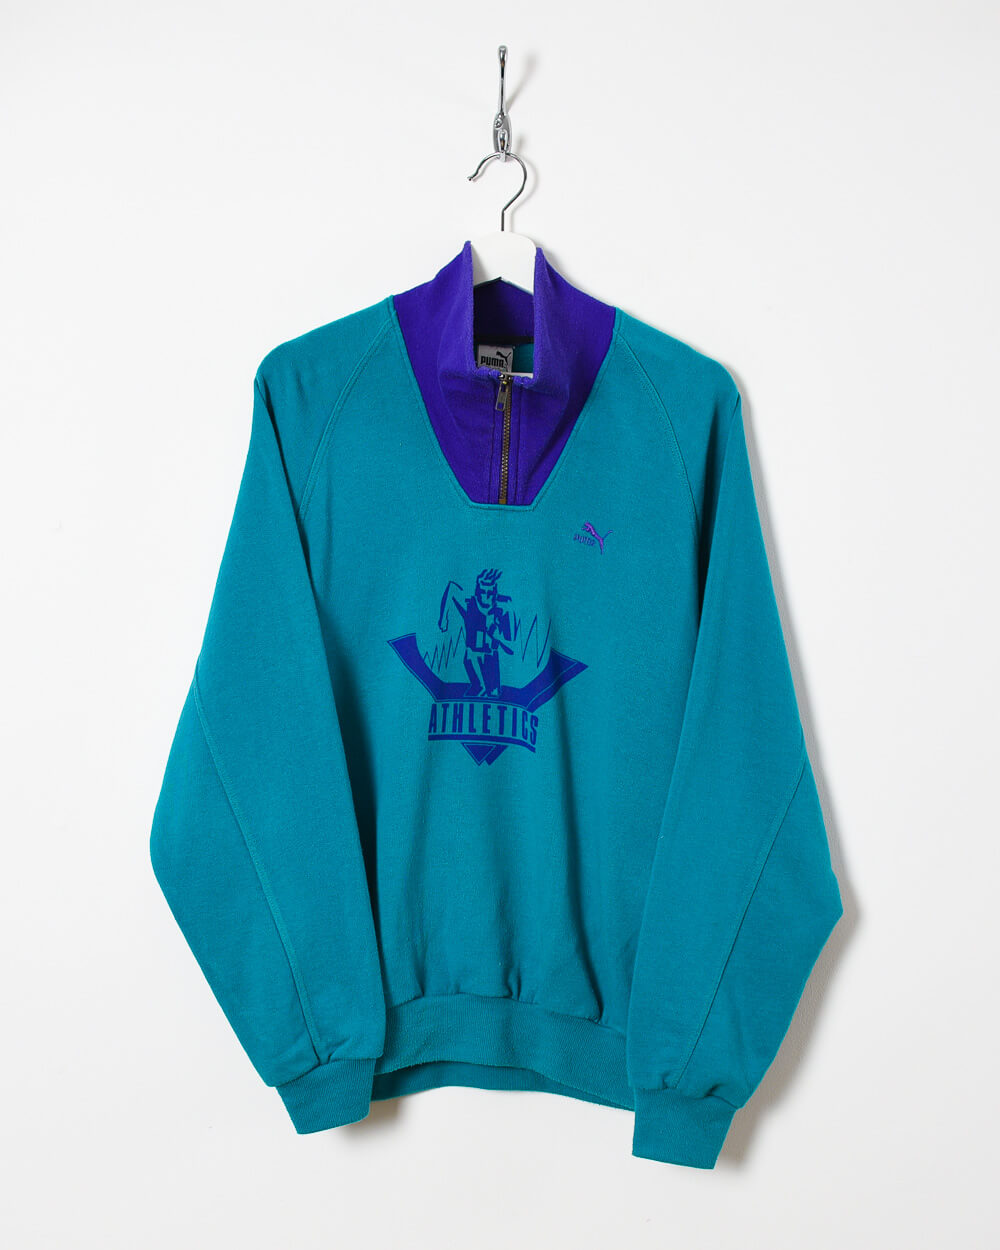 Puma Athletics 1/4 Zip Sweatshirt - Medium - Domno Vintage 90s, 80s, 00s Retro and Vintage Clothing 